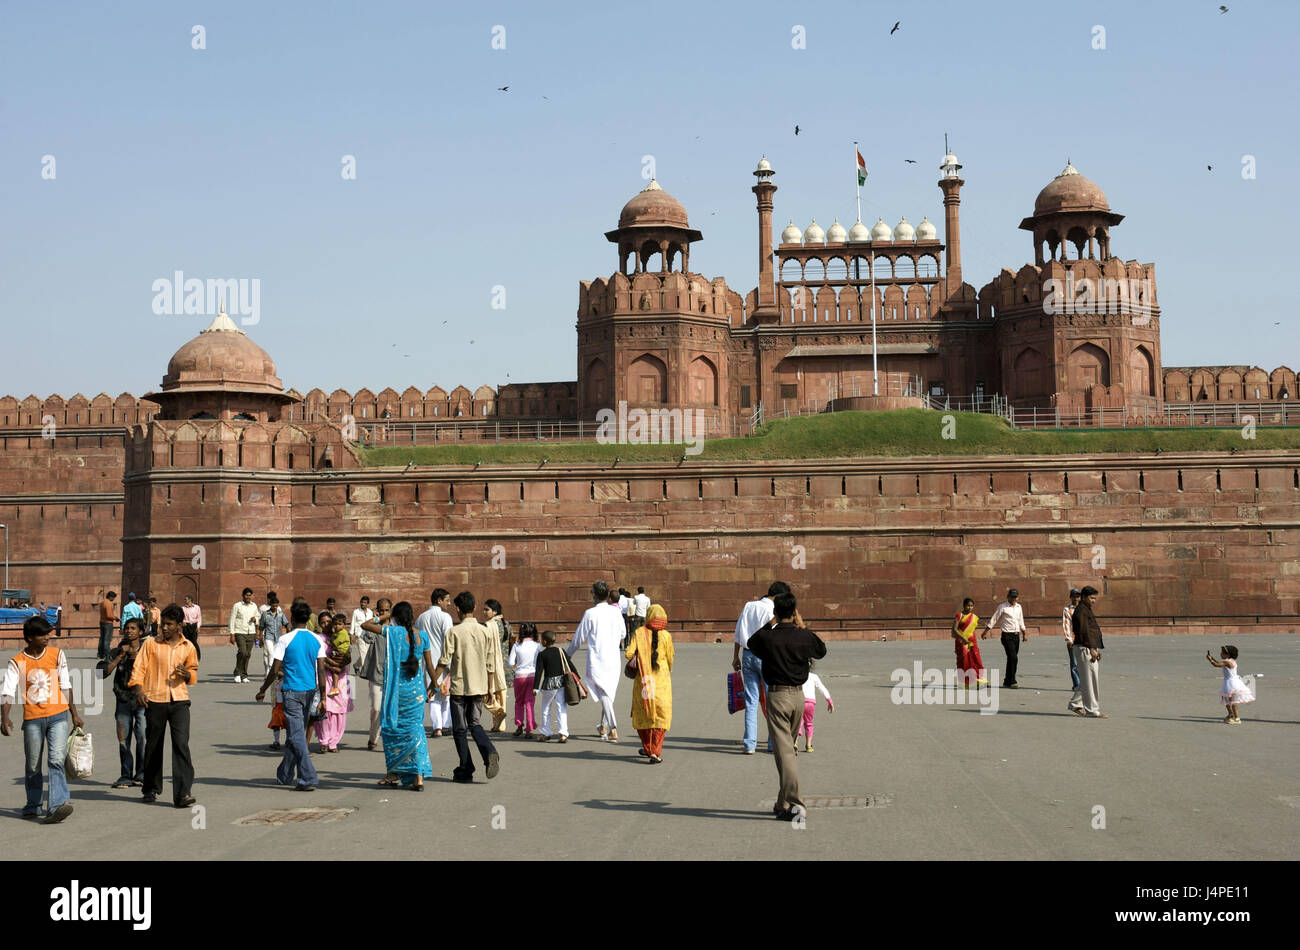 India, Delhi, Old Delhi, Red fort, Lahore gates, Stock Photo